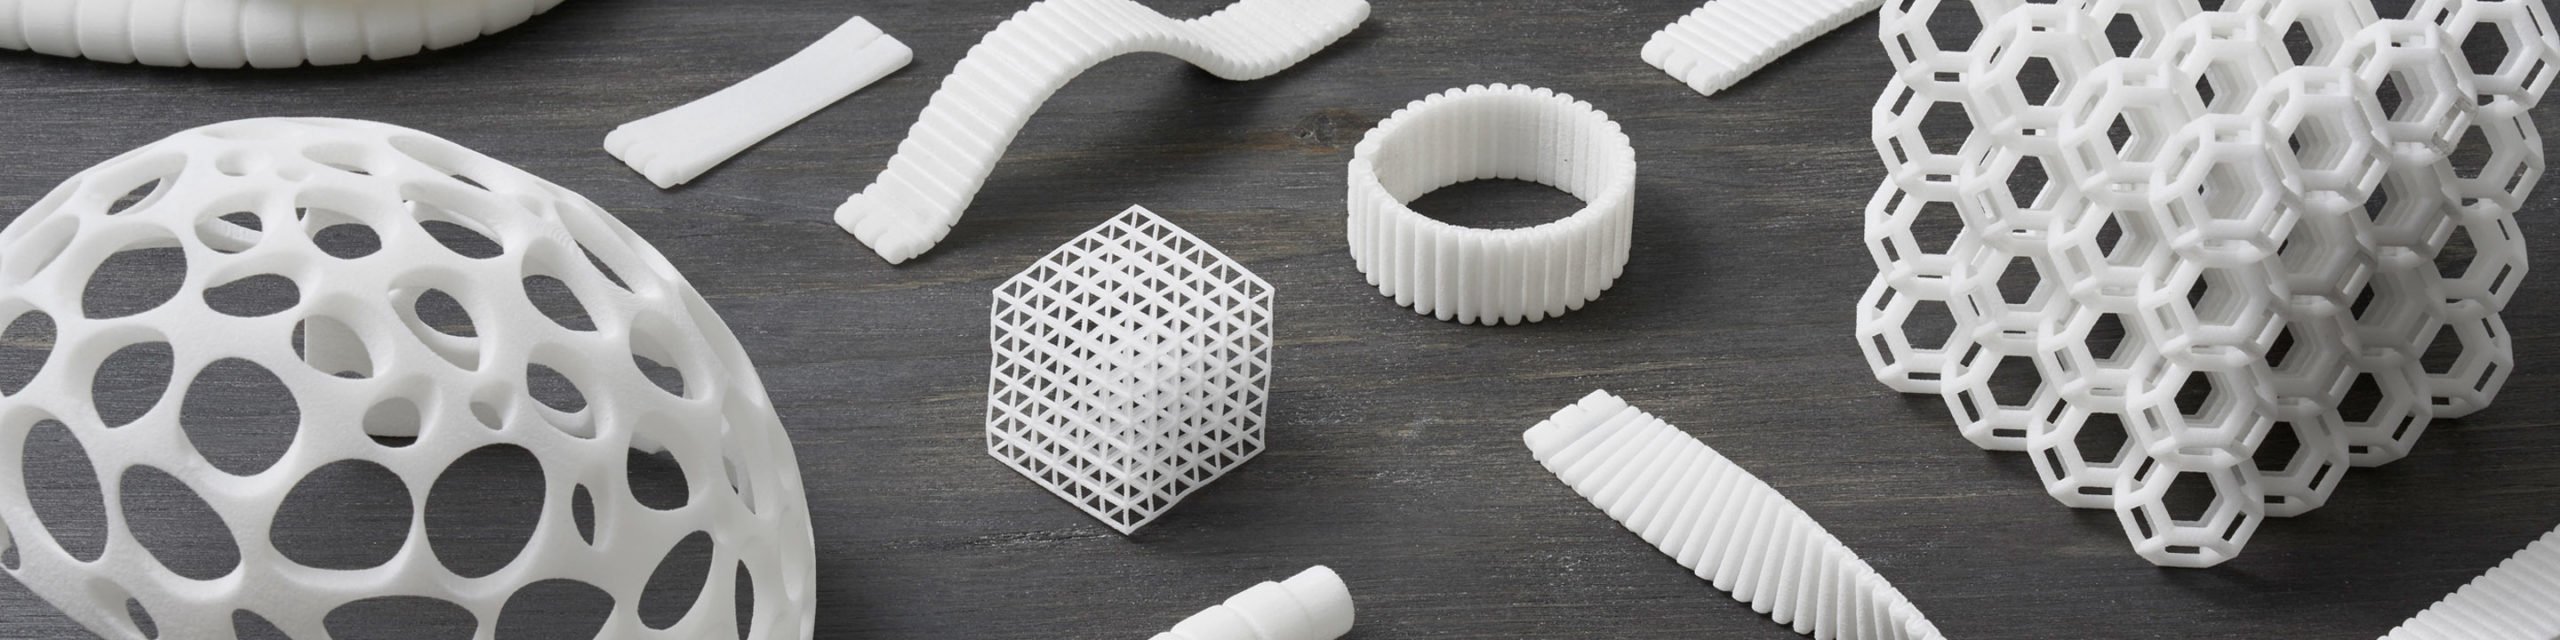 Shapeways: TPU (Thermoplastic Polyurethane) – 3D Printing Material